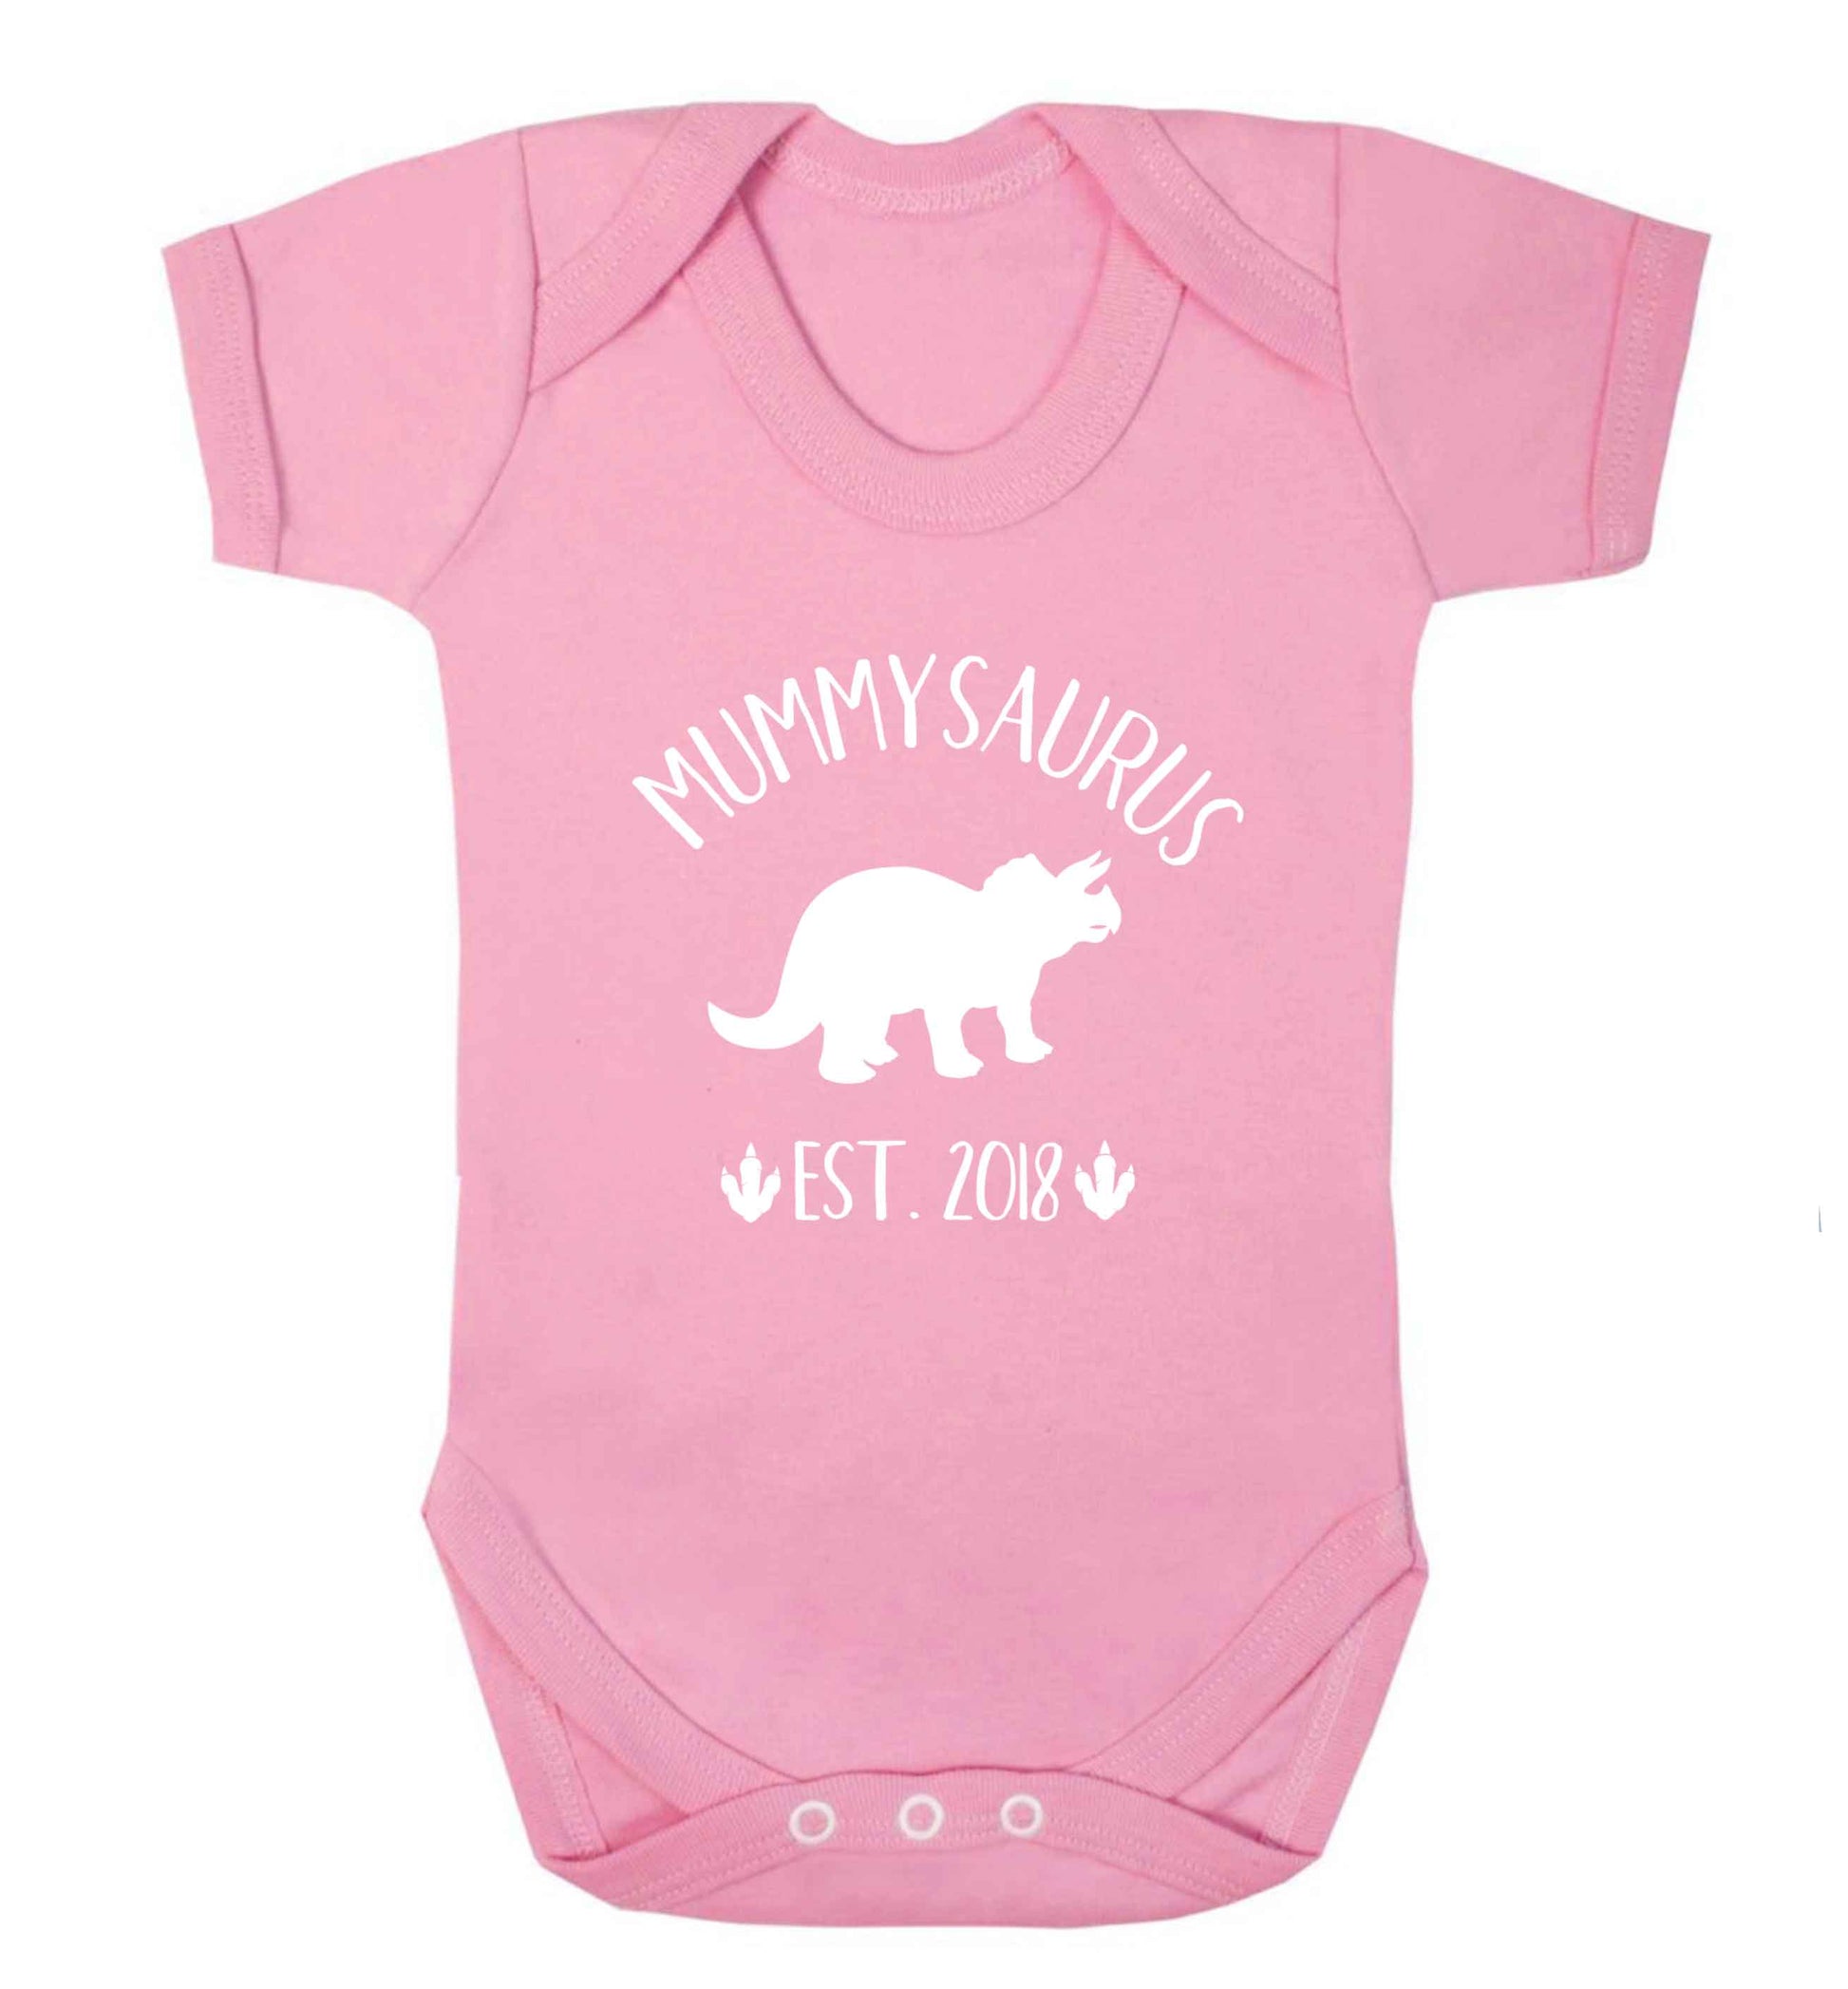 Personalised mummysaurus date baby vest pale pink 18-24 months